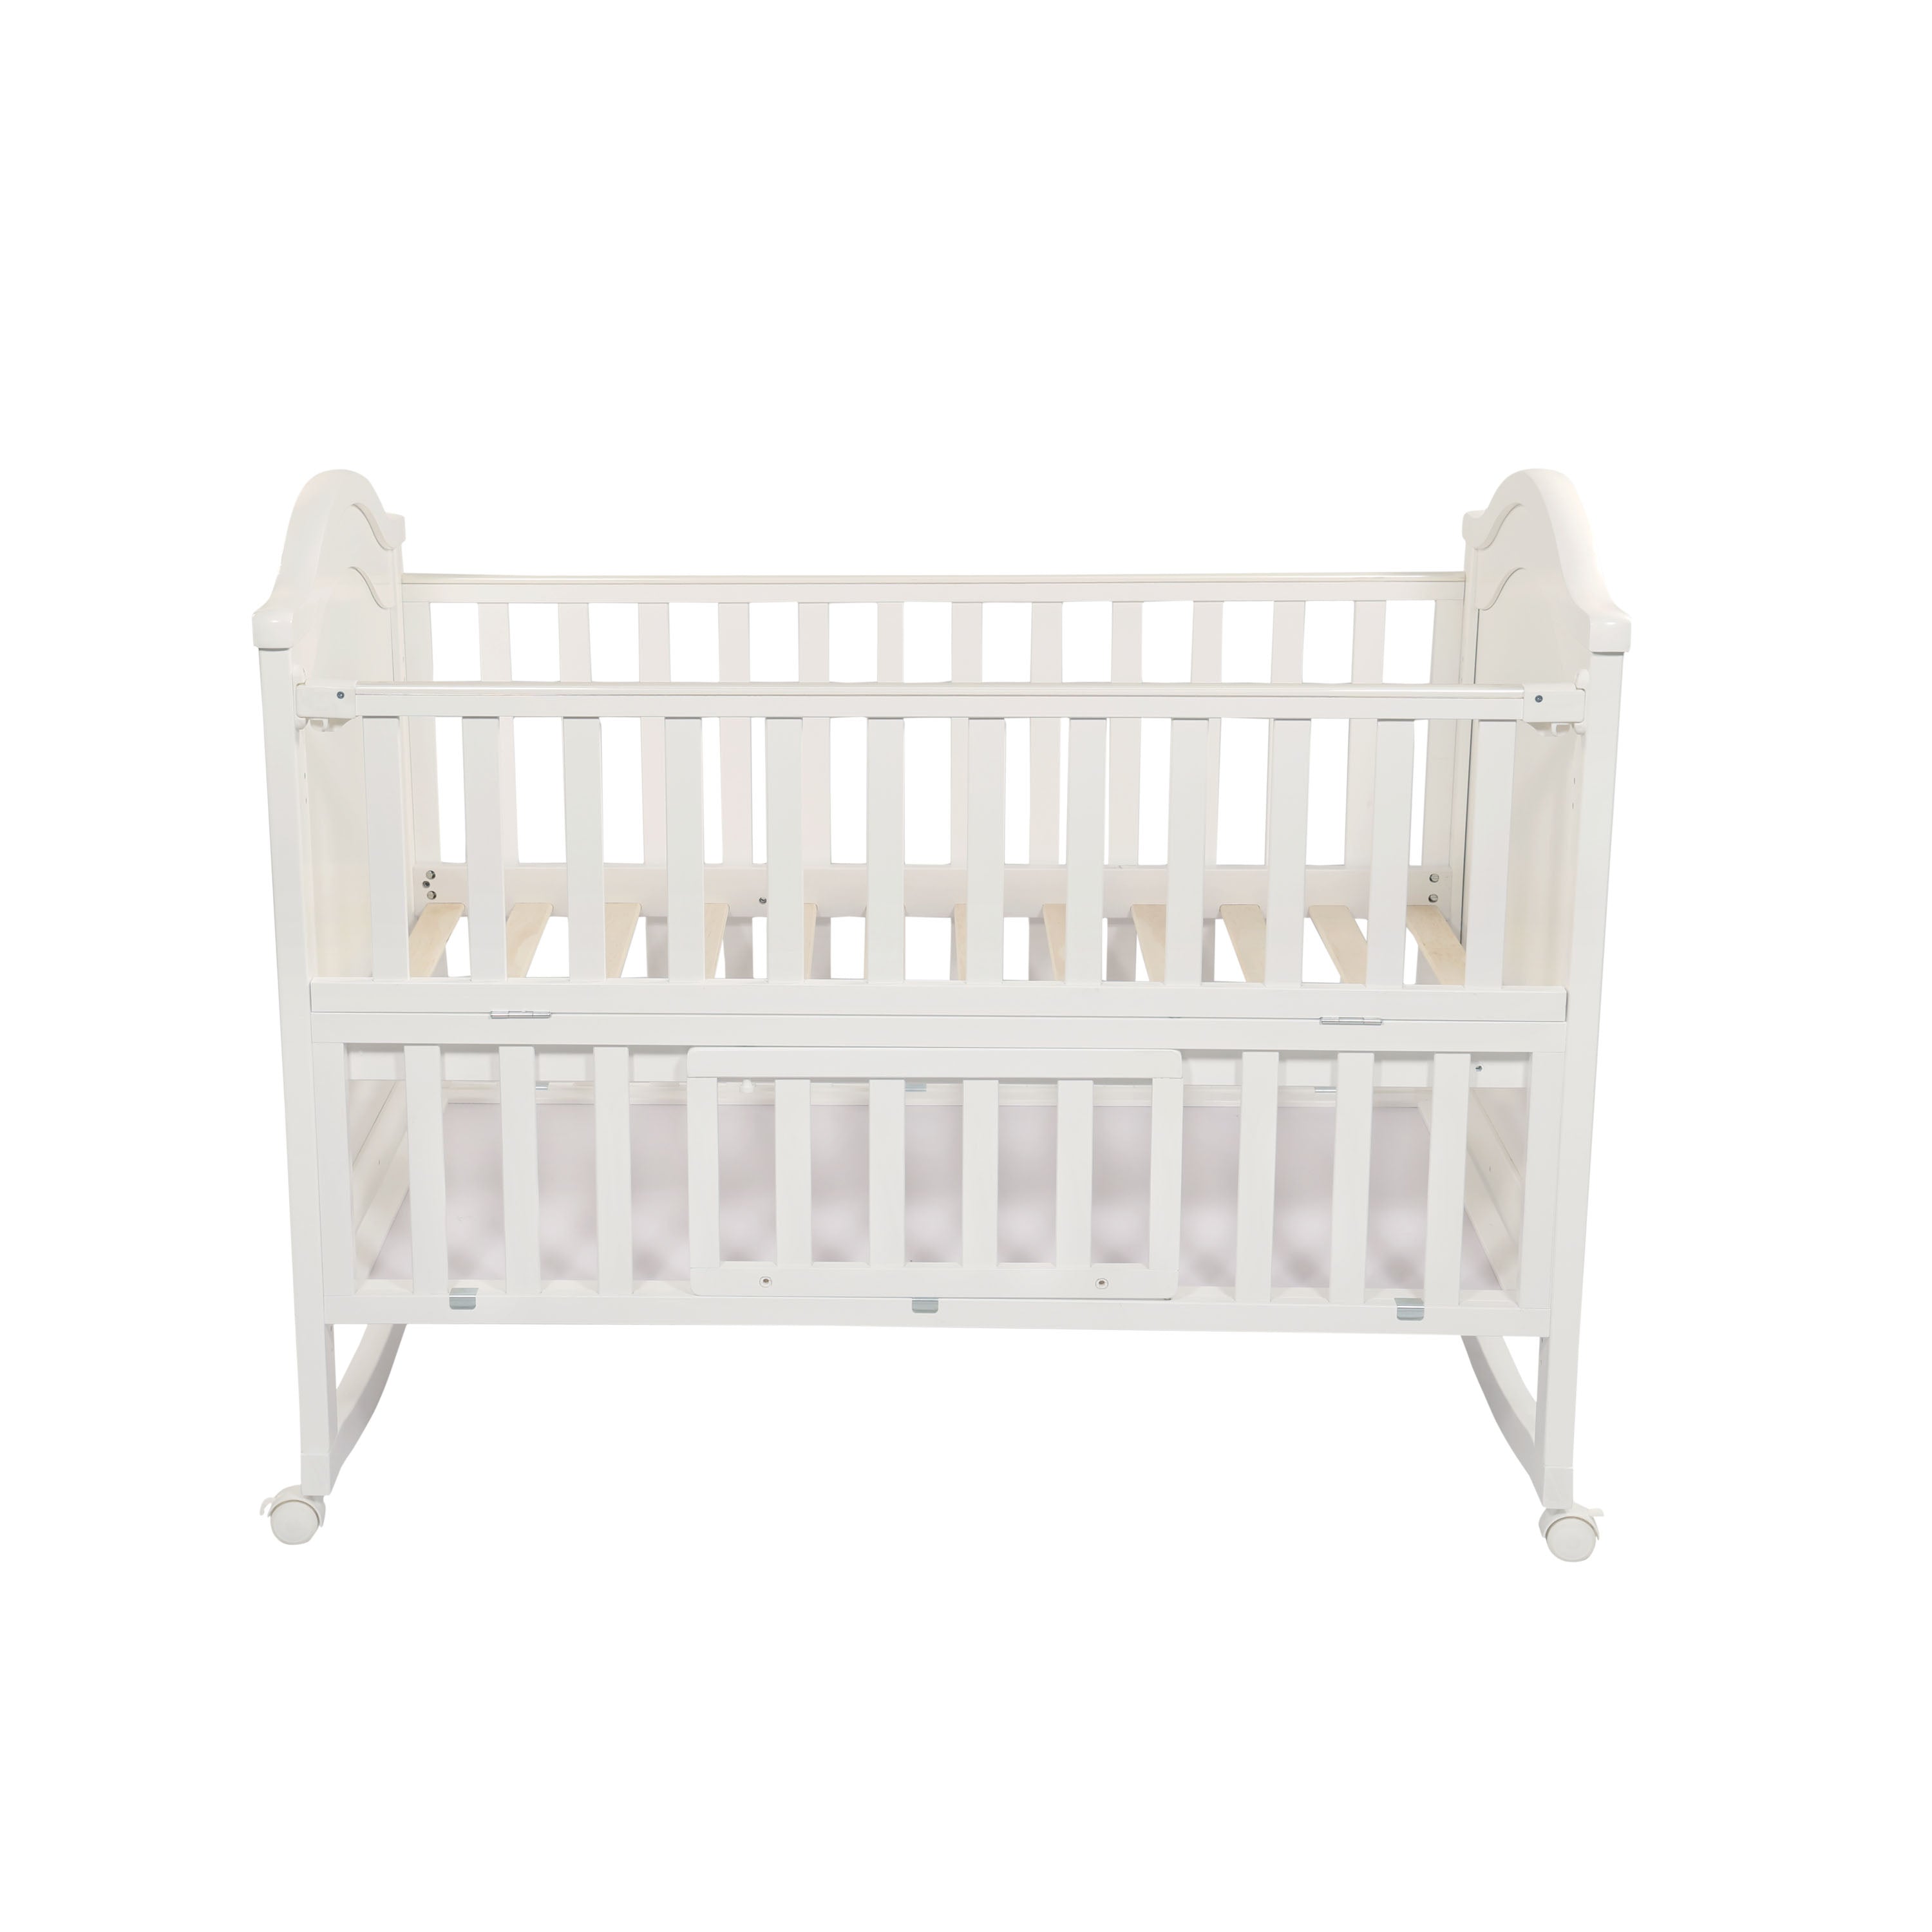 Emma Pine Wood Crib/Cot for Baby's Joy - White